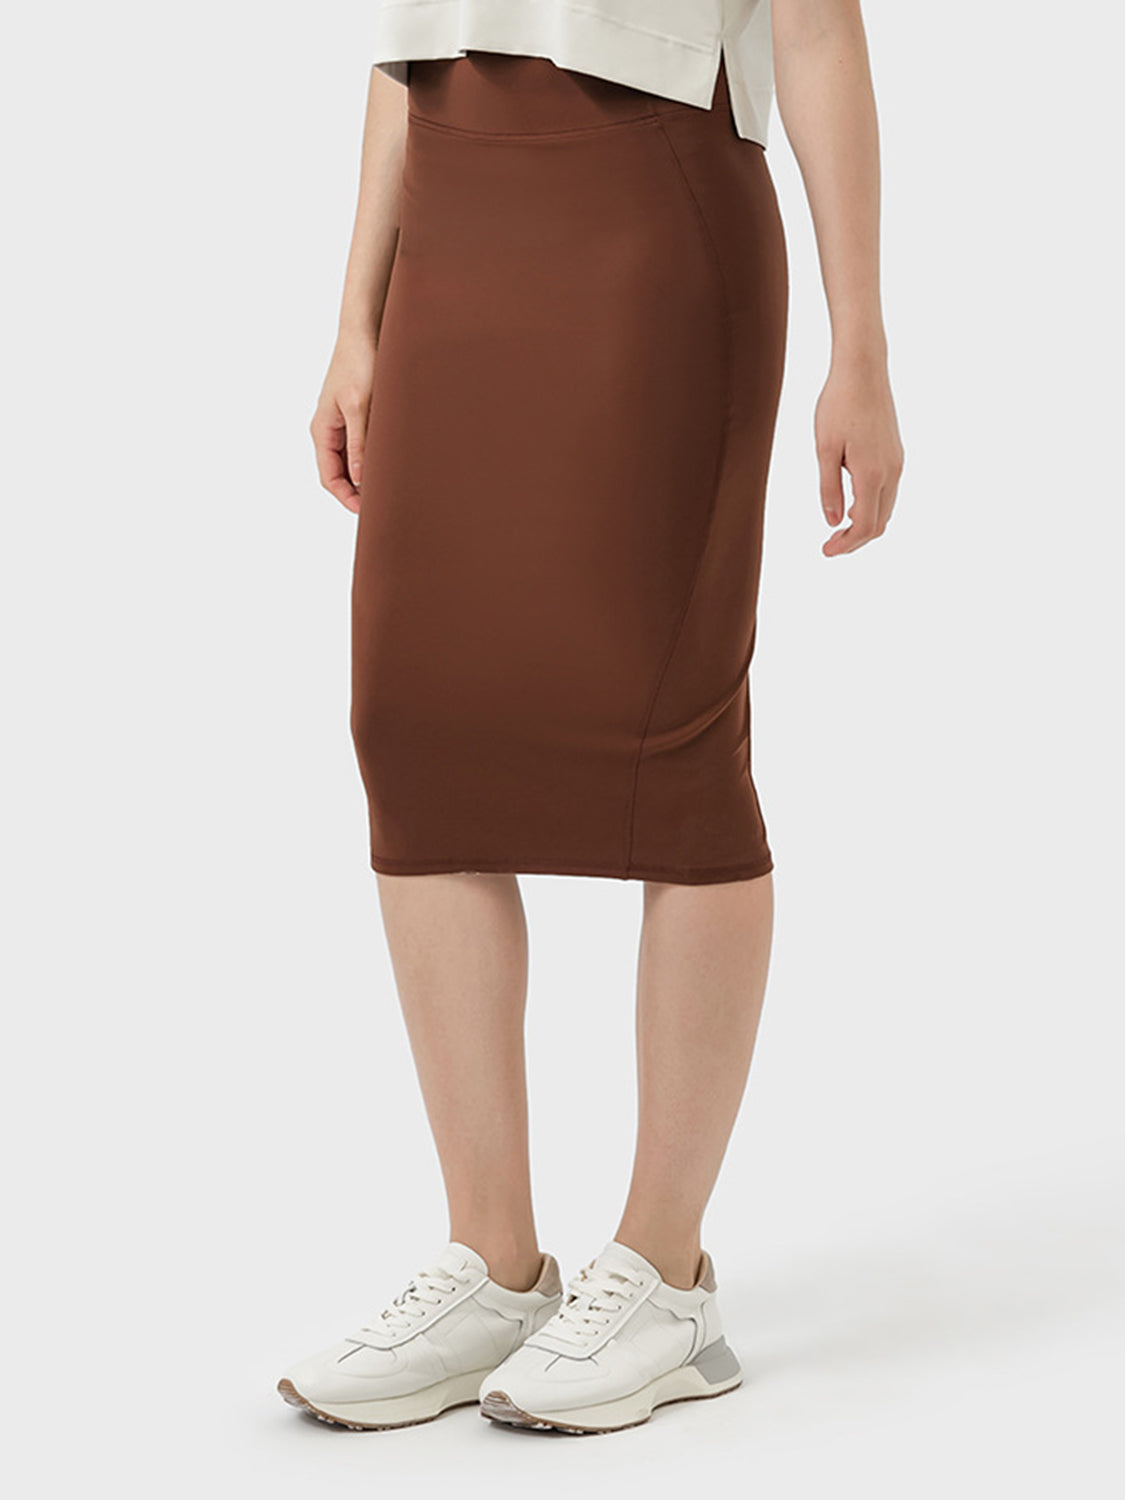 Slit Wrap Active Skirt - Babbazon skirt